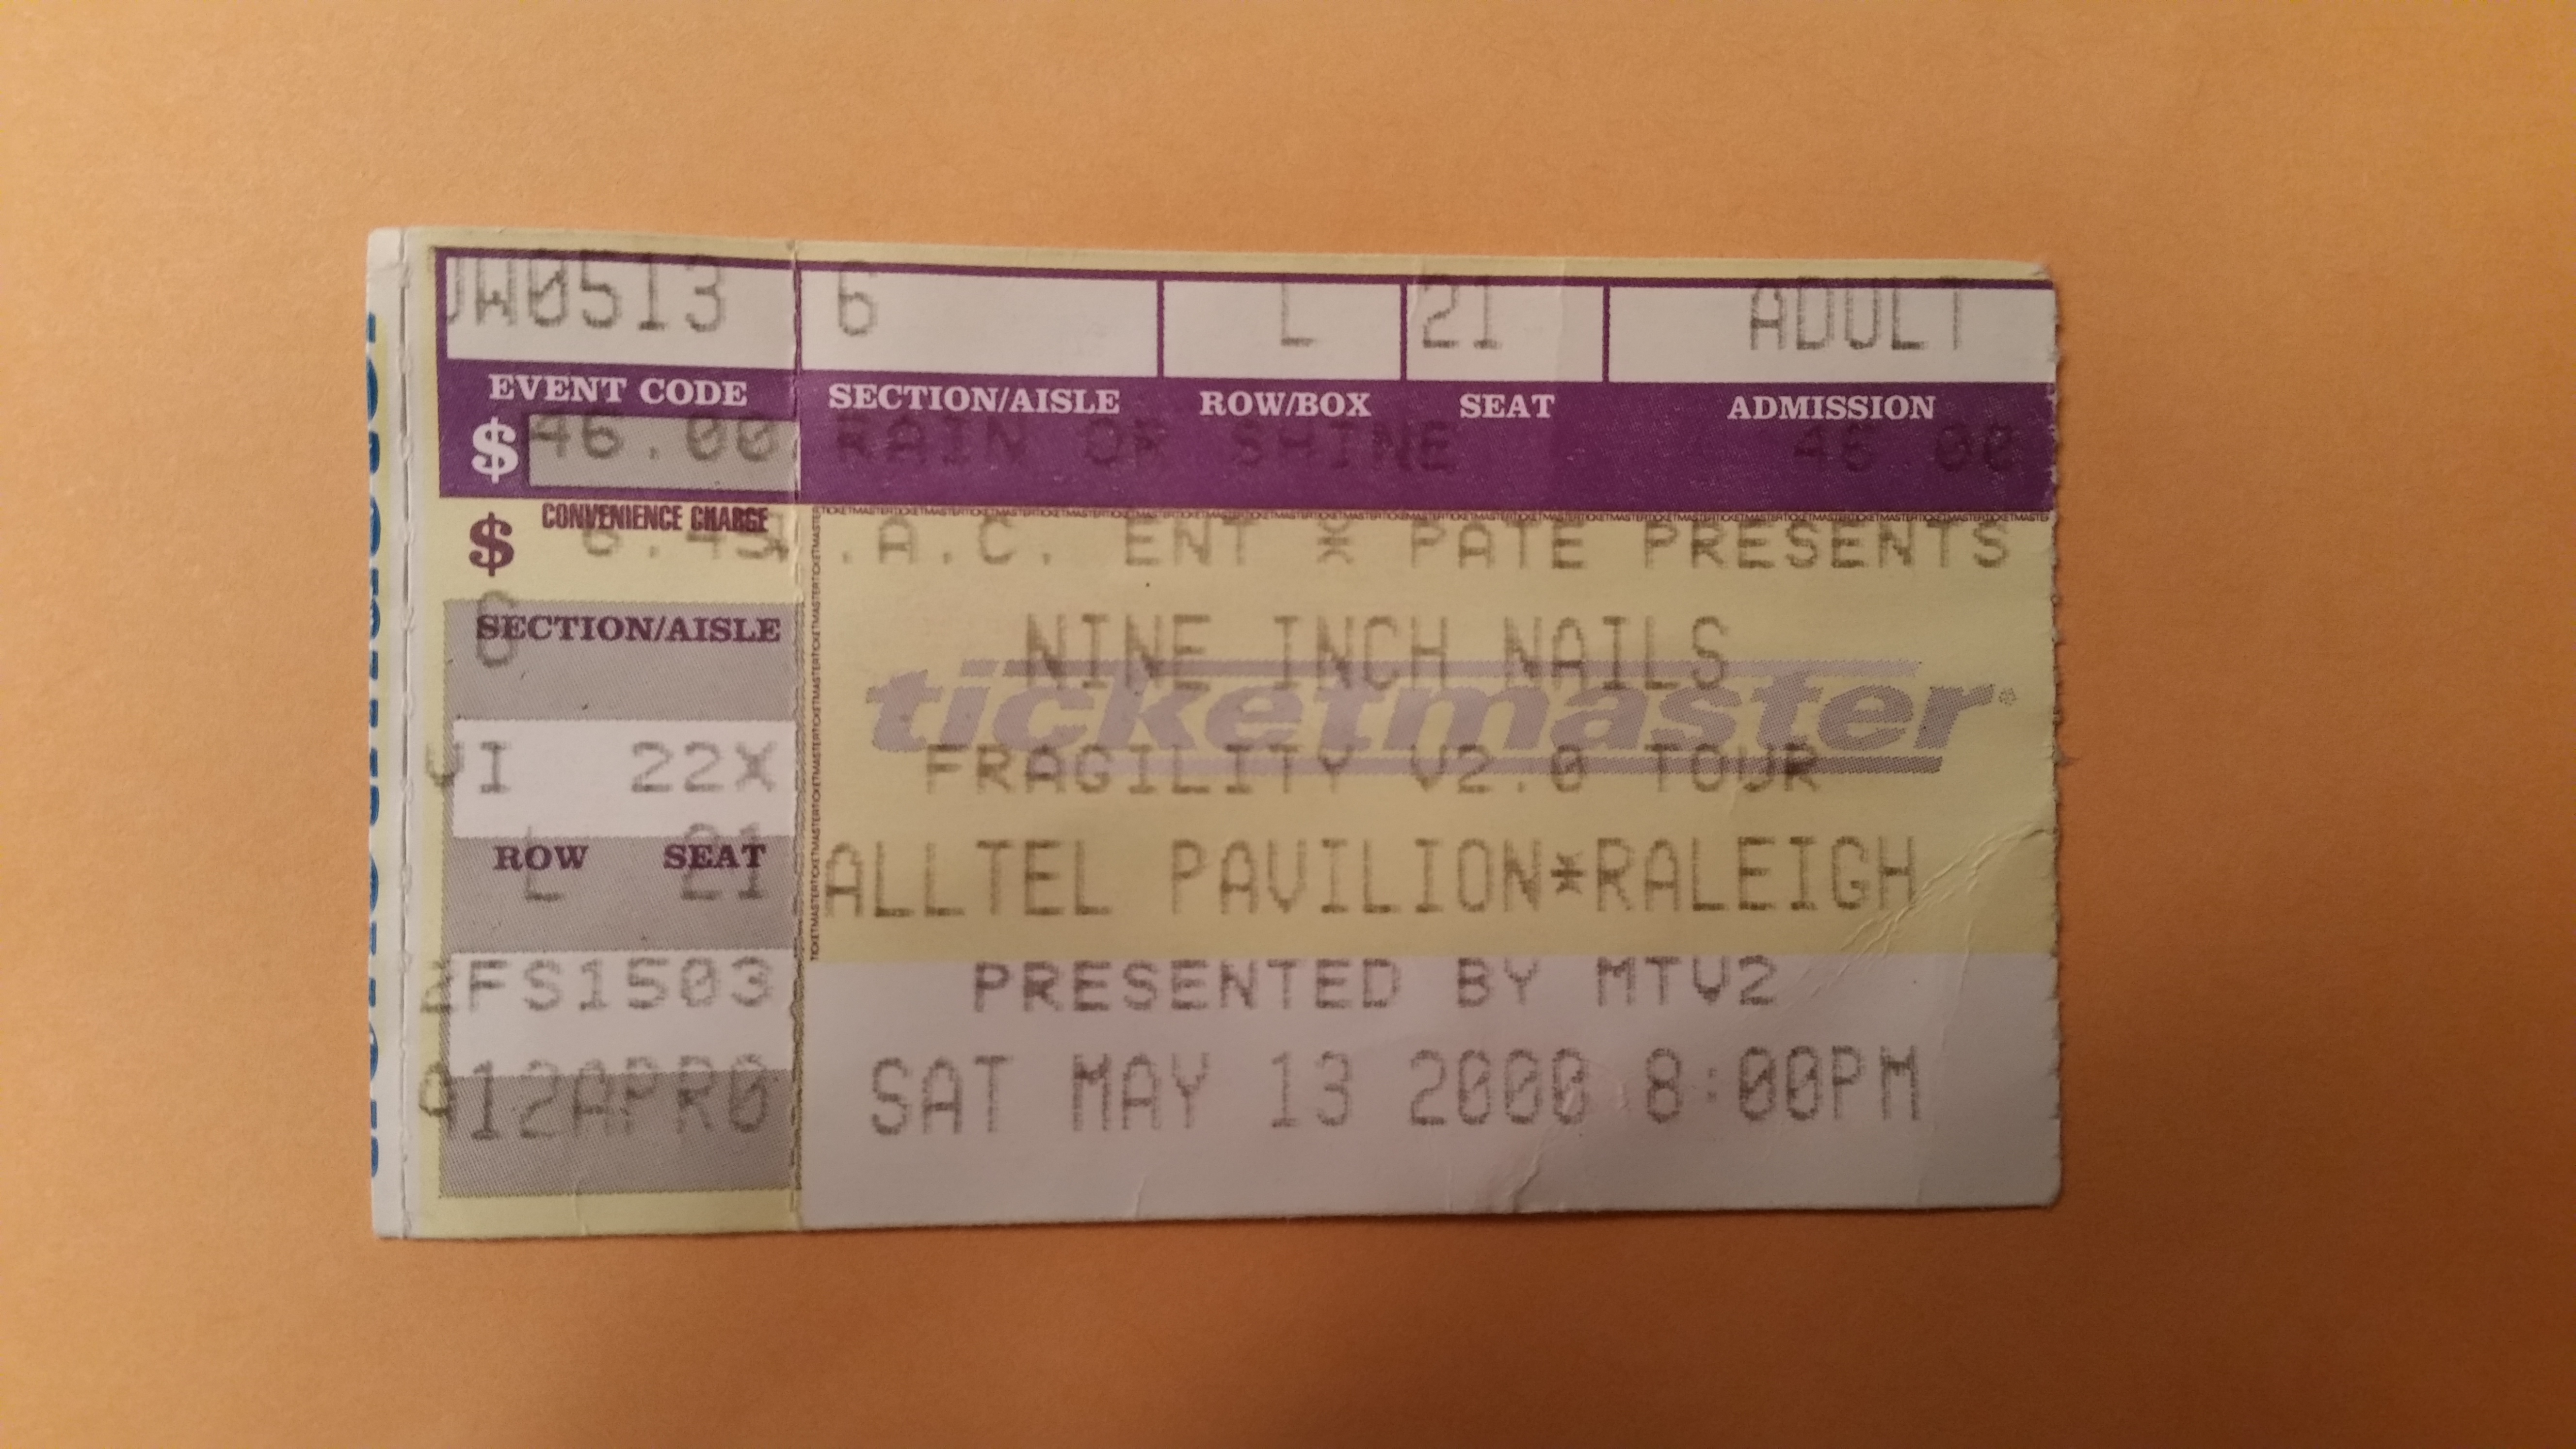 2000/05/13 Ticket